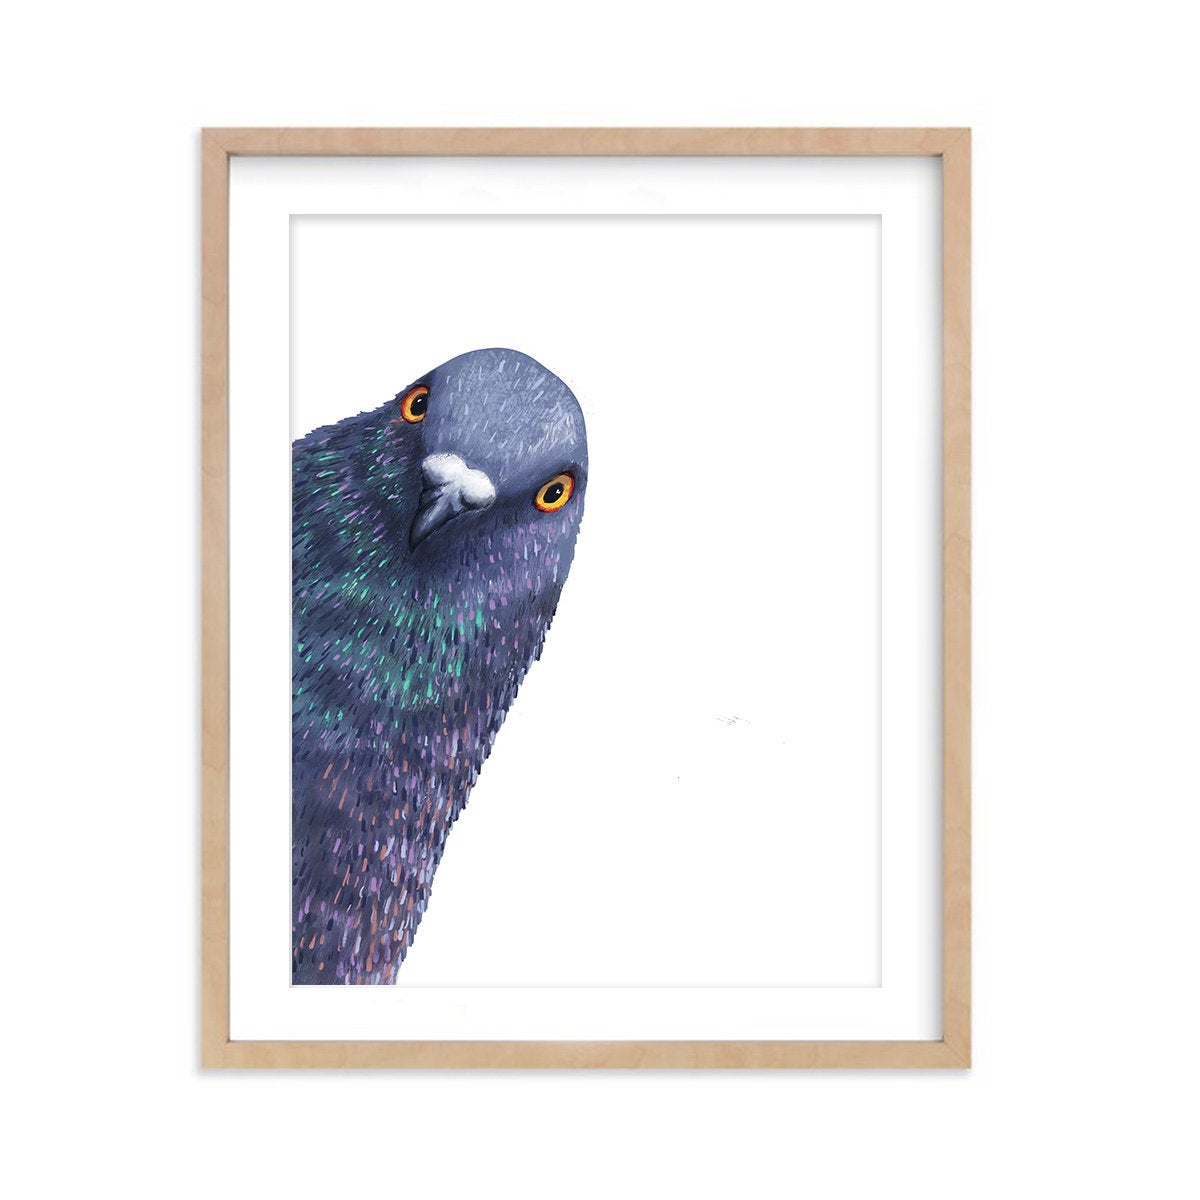 Peeking Pigeon - Art Print